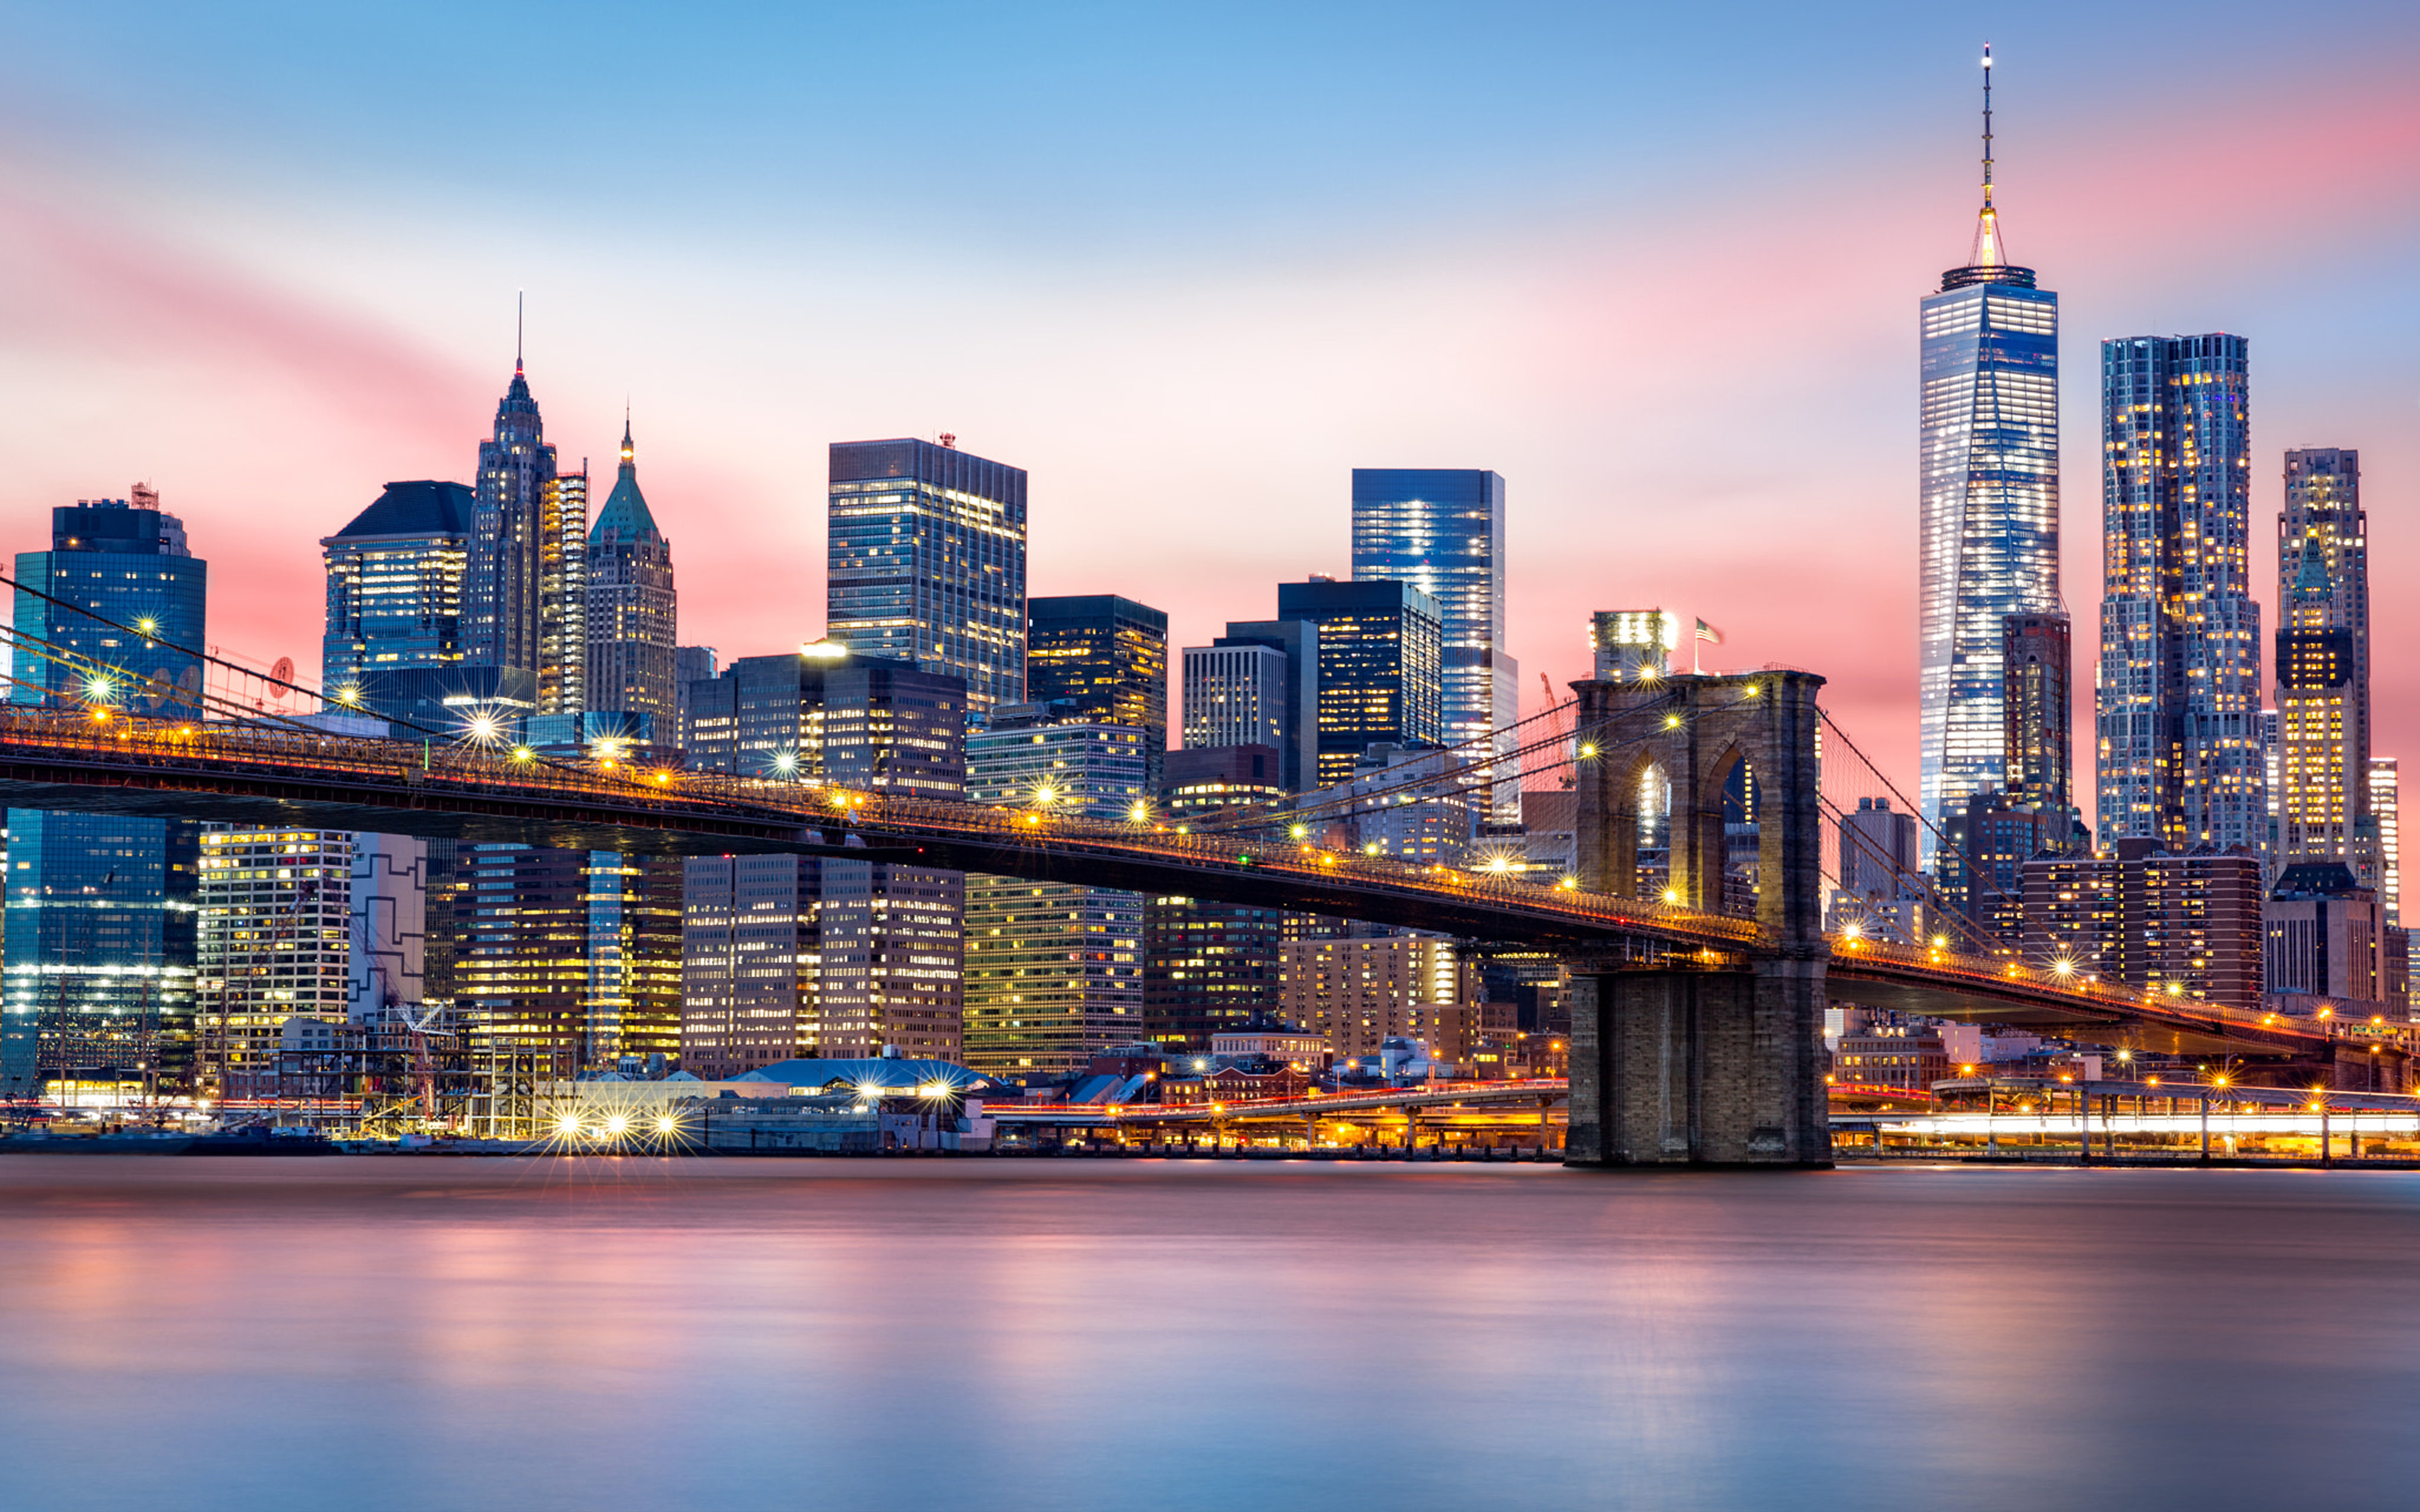 Manhattan Financial District And Brooklyn Bridge At Sunset Brooklyn